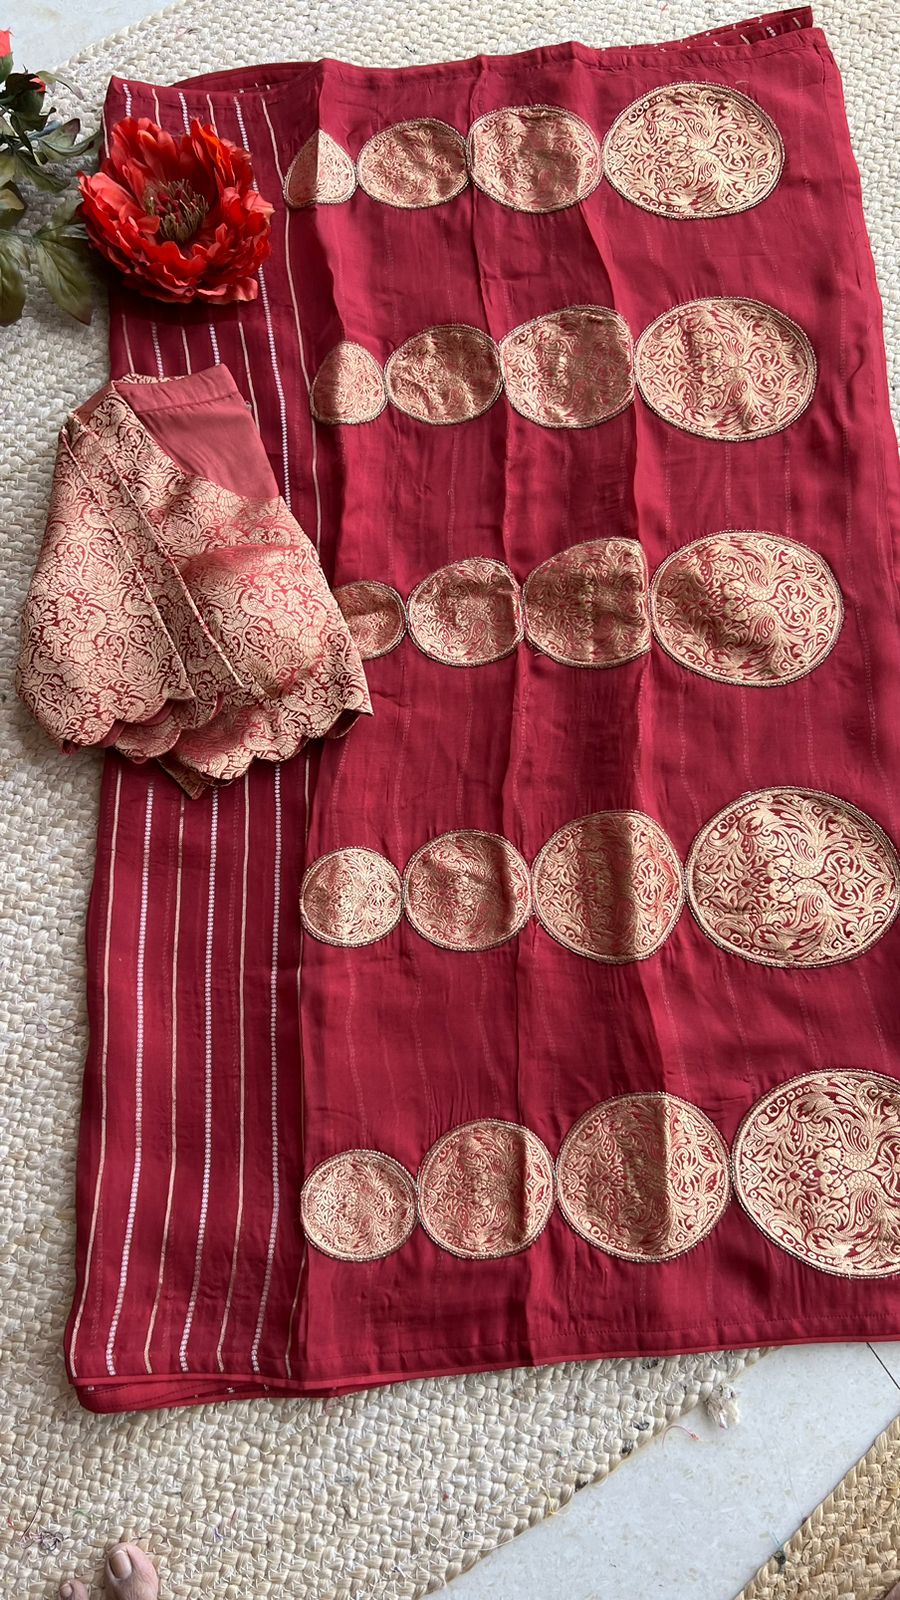 Maroon organza striped saree with banarasi blouse